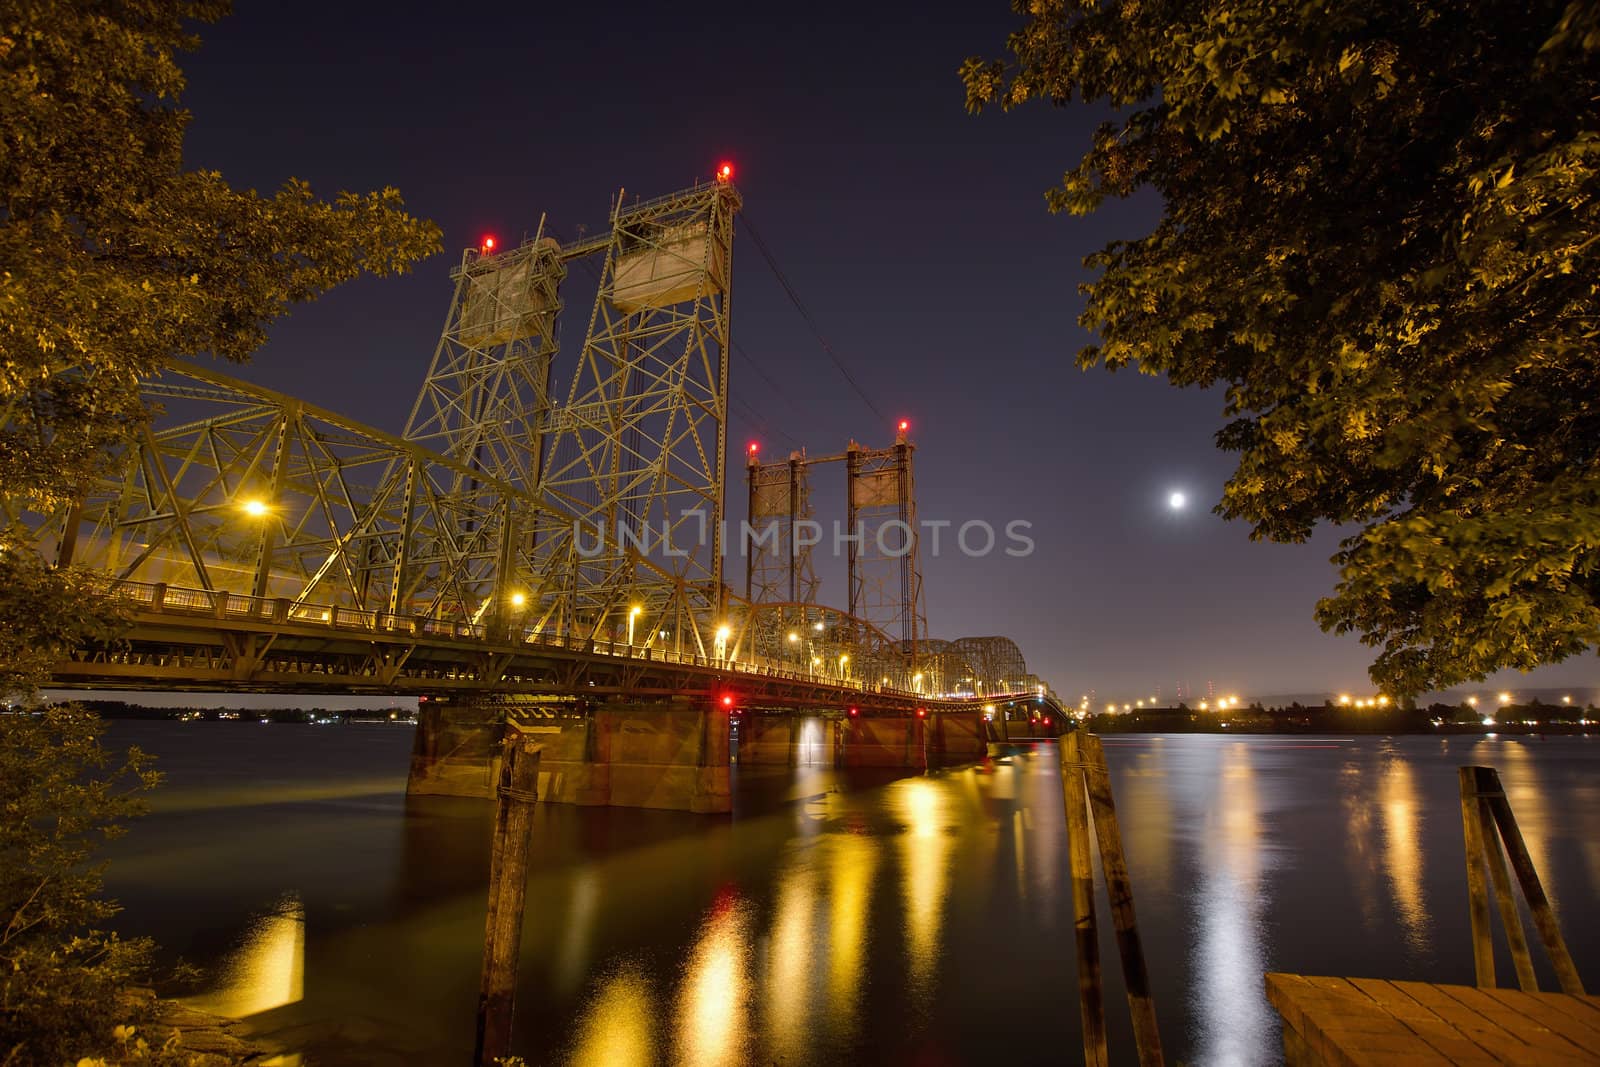 Columbia River Crossing Interstate Bridge at Night by jpldesigns